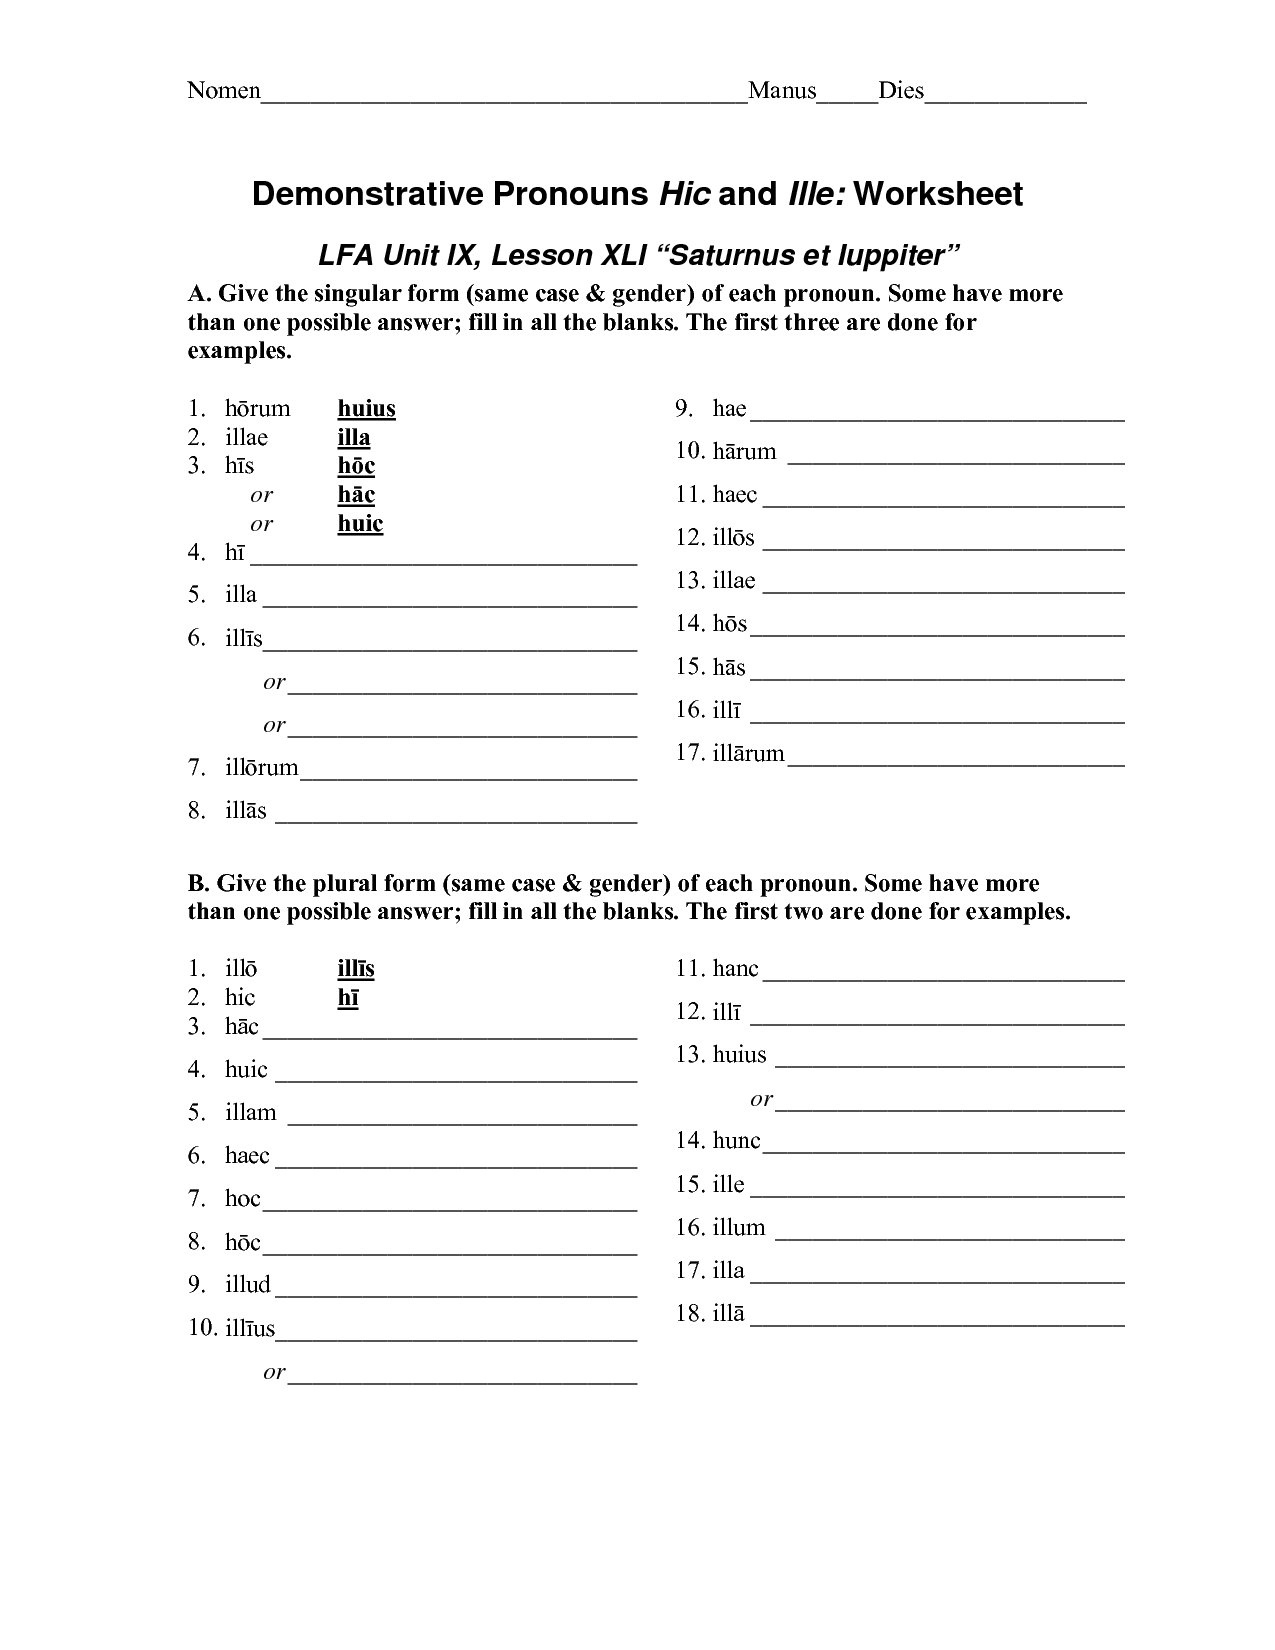 Demonstrative Pronouns Worksheet Image